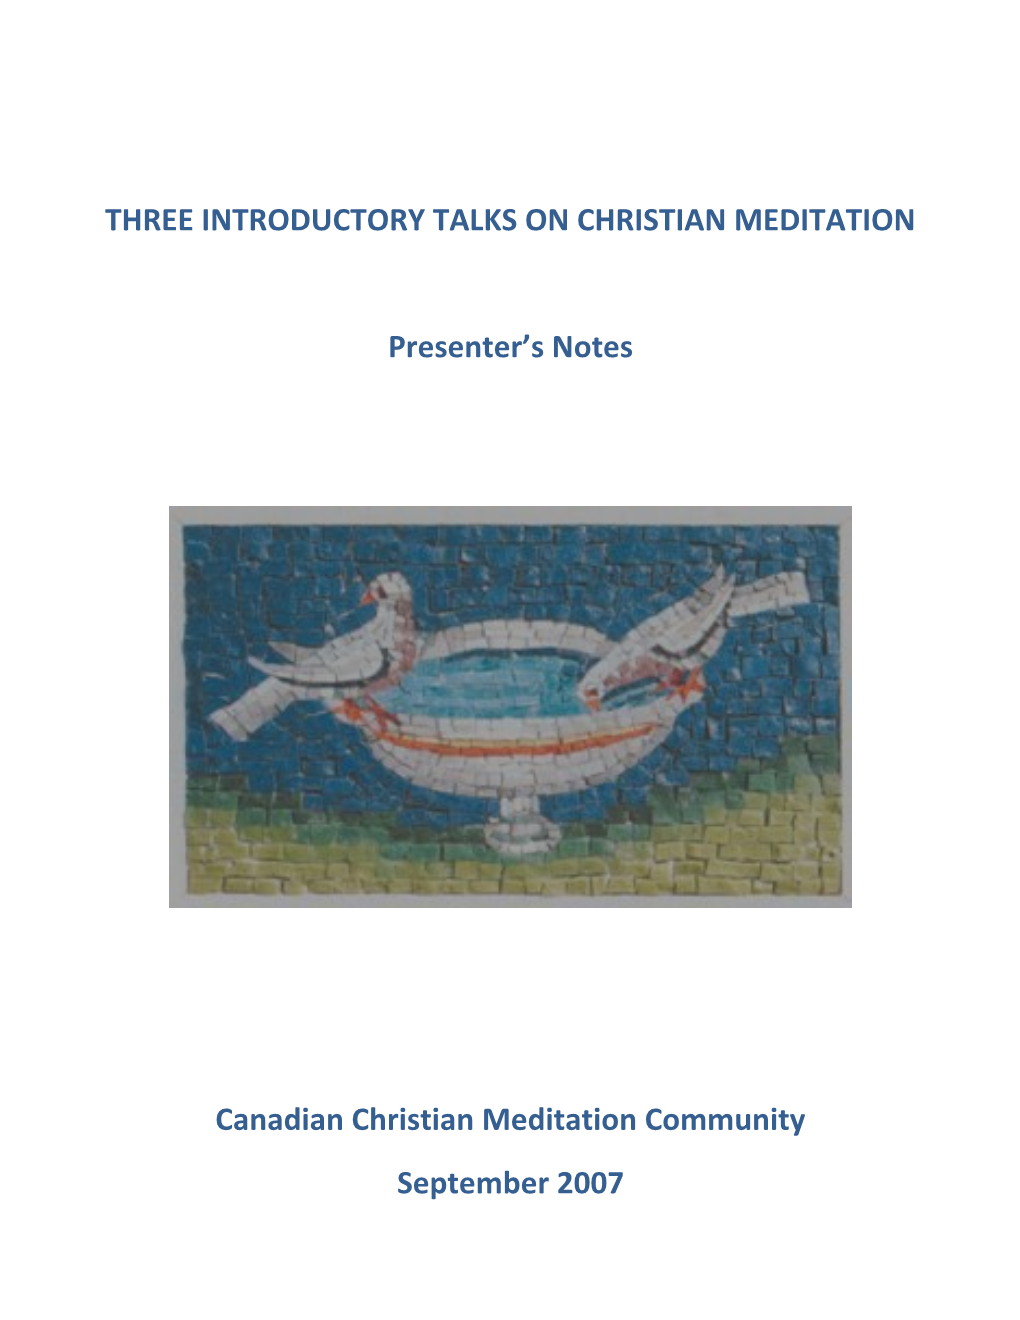 Three Introductory Talks on Christian Meditation